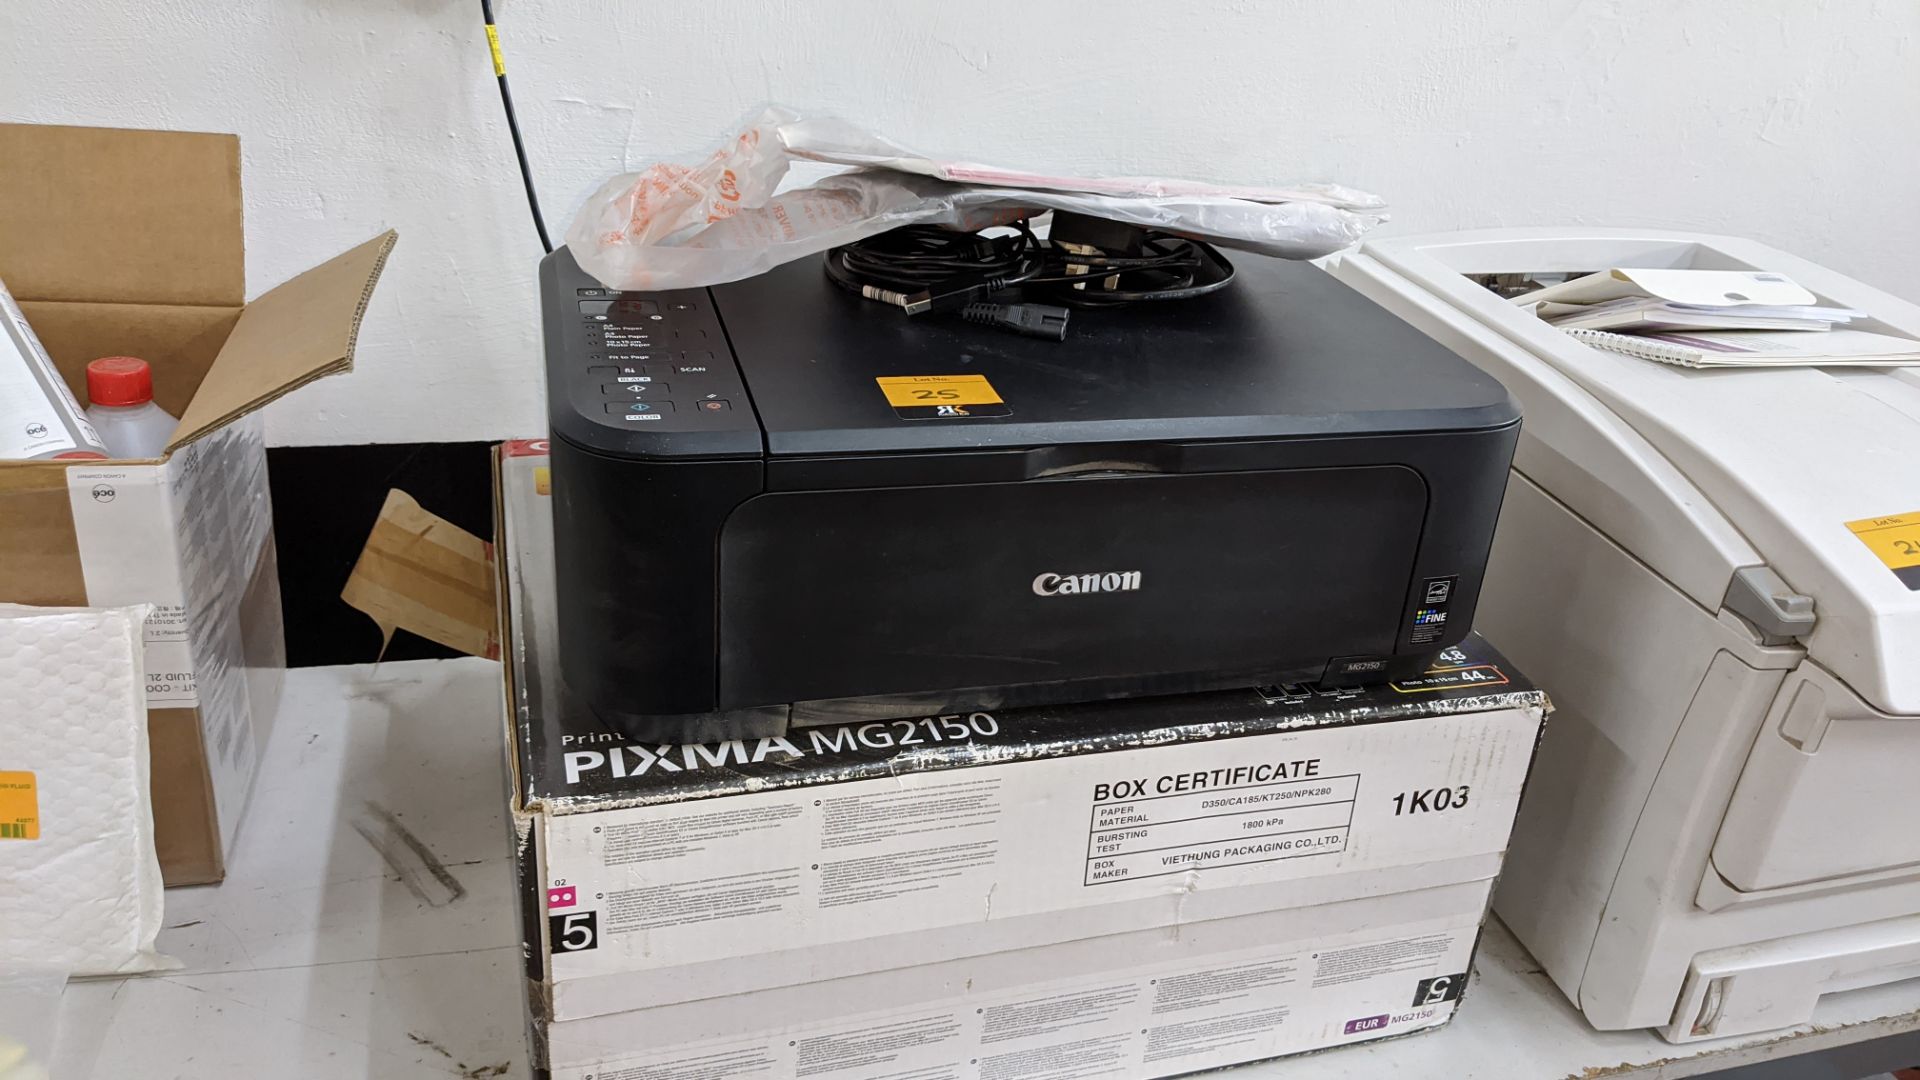 Canon Pixma MG2150 multifunction inkjet printer - Image 2 of 5